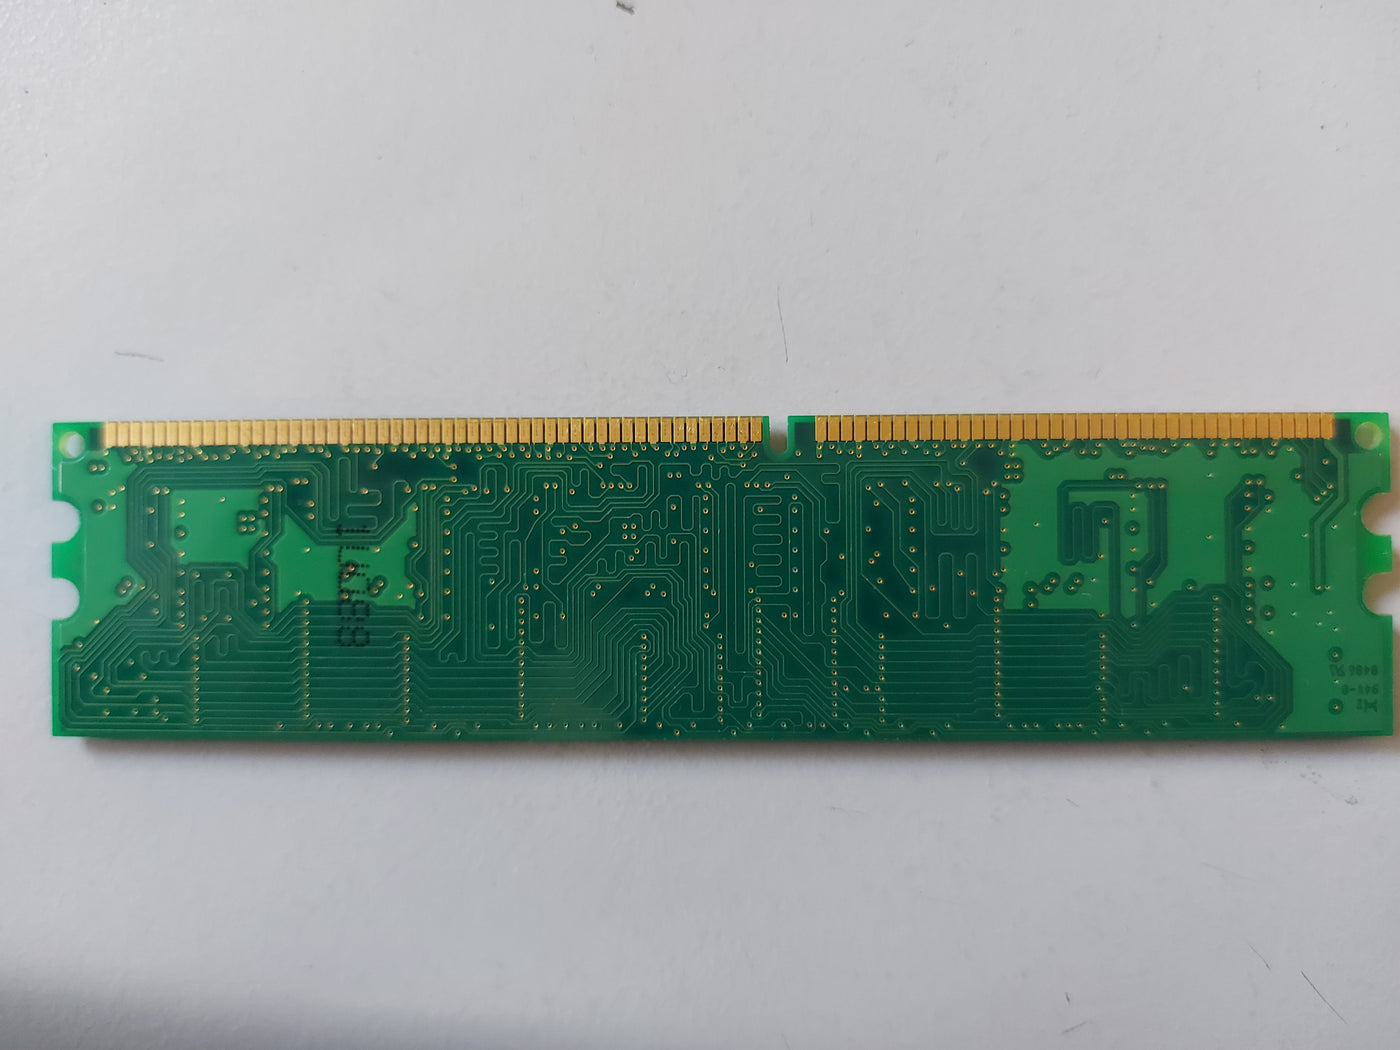 Nanya 128MB PC2700 DDR-333MHz non-ECC Unbuffered CL2.5 184-Pin DIMM NT128D64SH4B